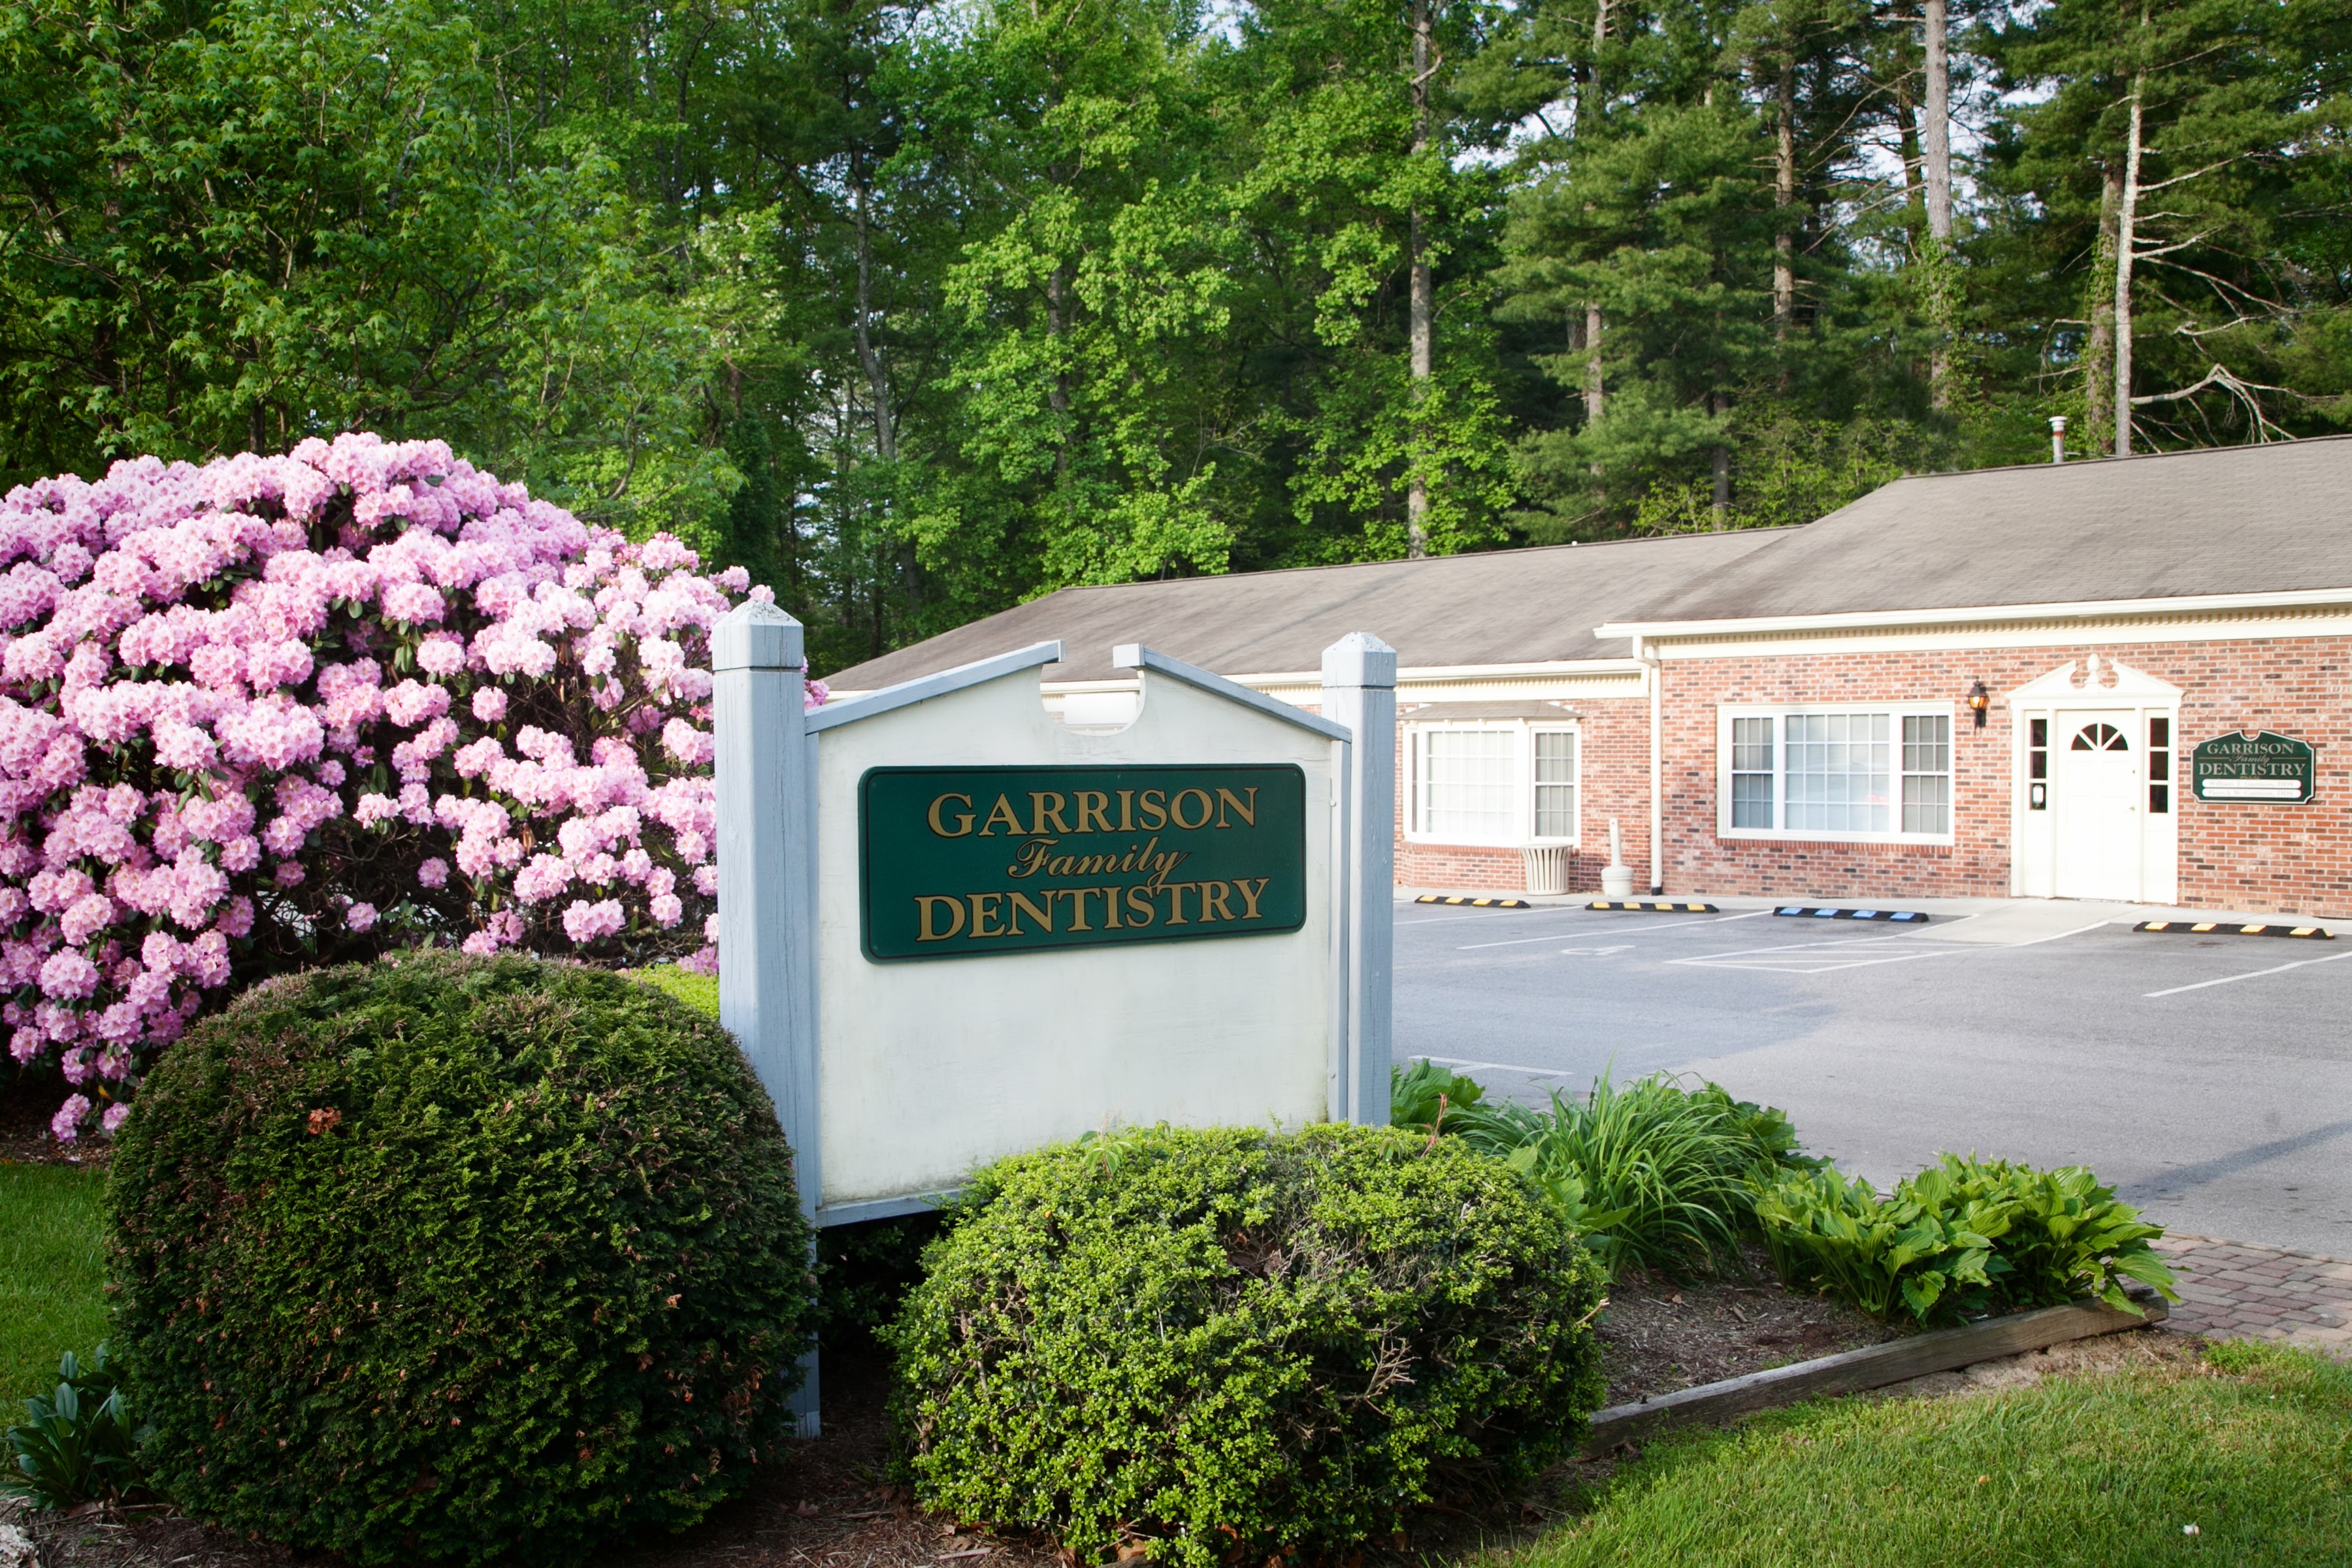 The office of Garrison Family Dentistry